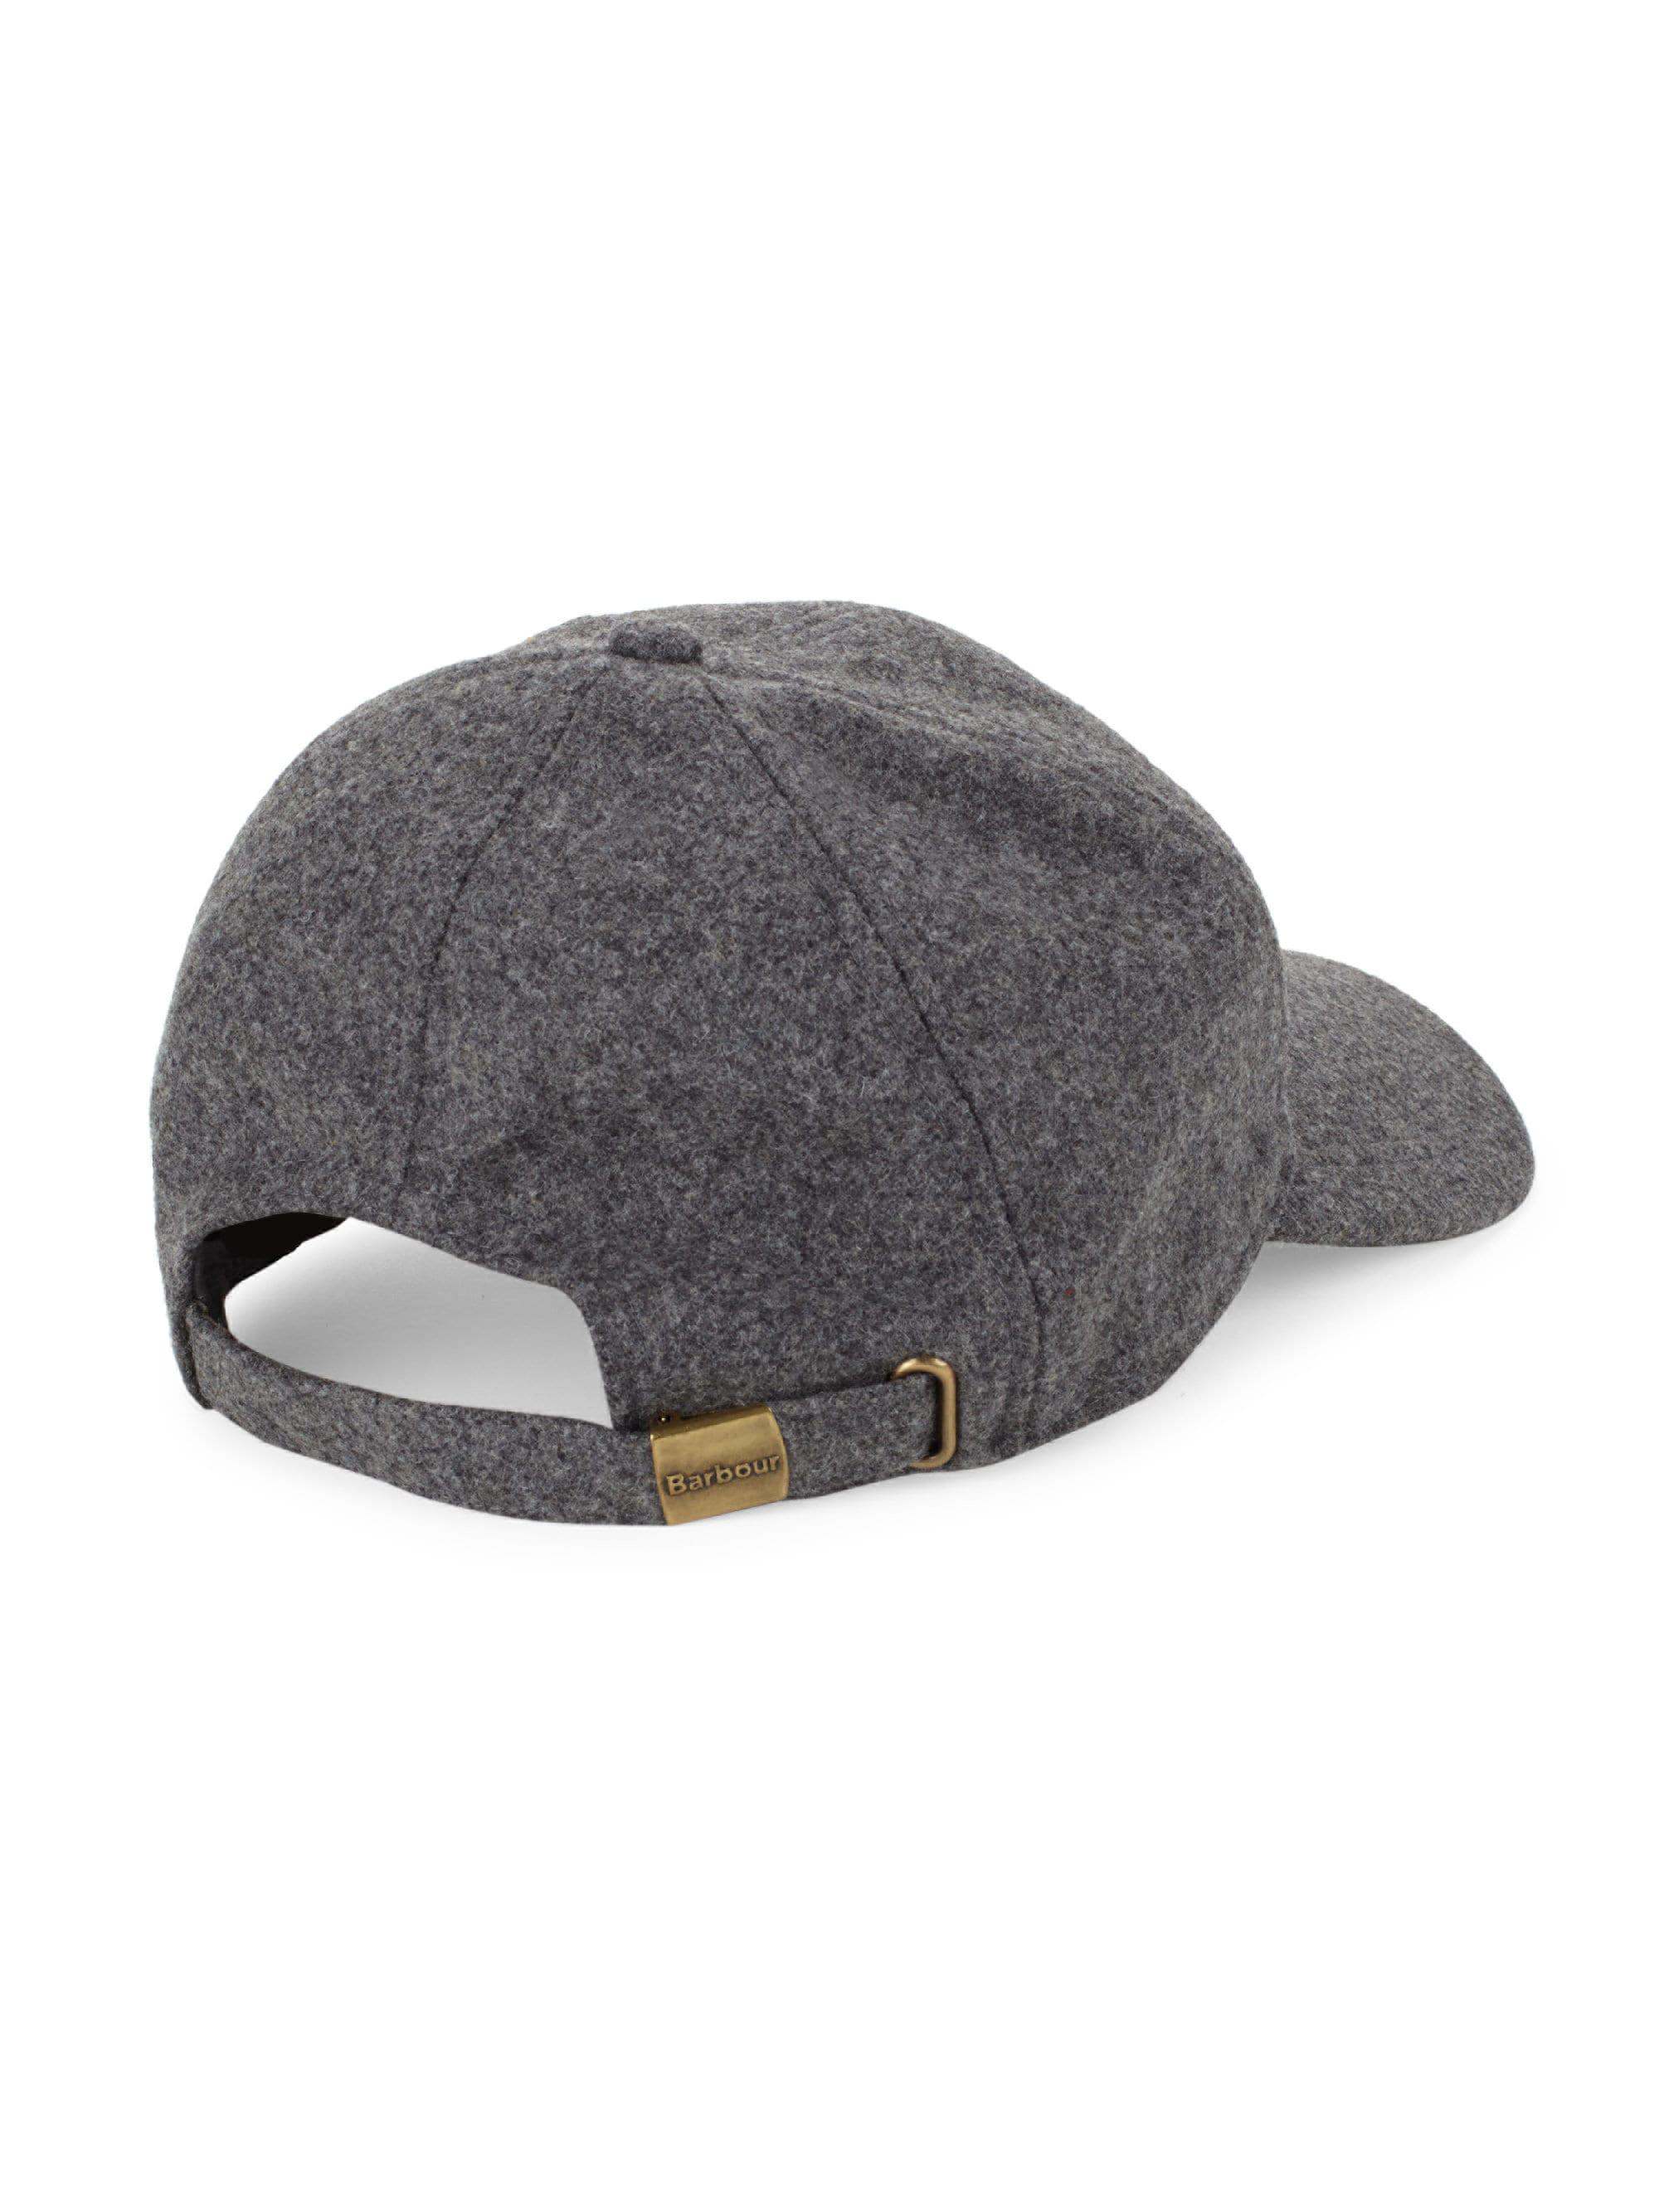 Barbour Coopworth Wool-blend Sports Cap in Grey (Gray) for Men - Lyst